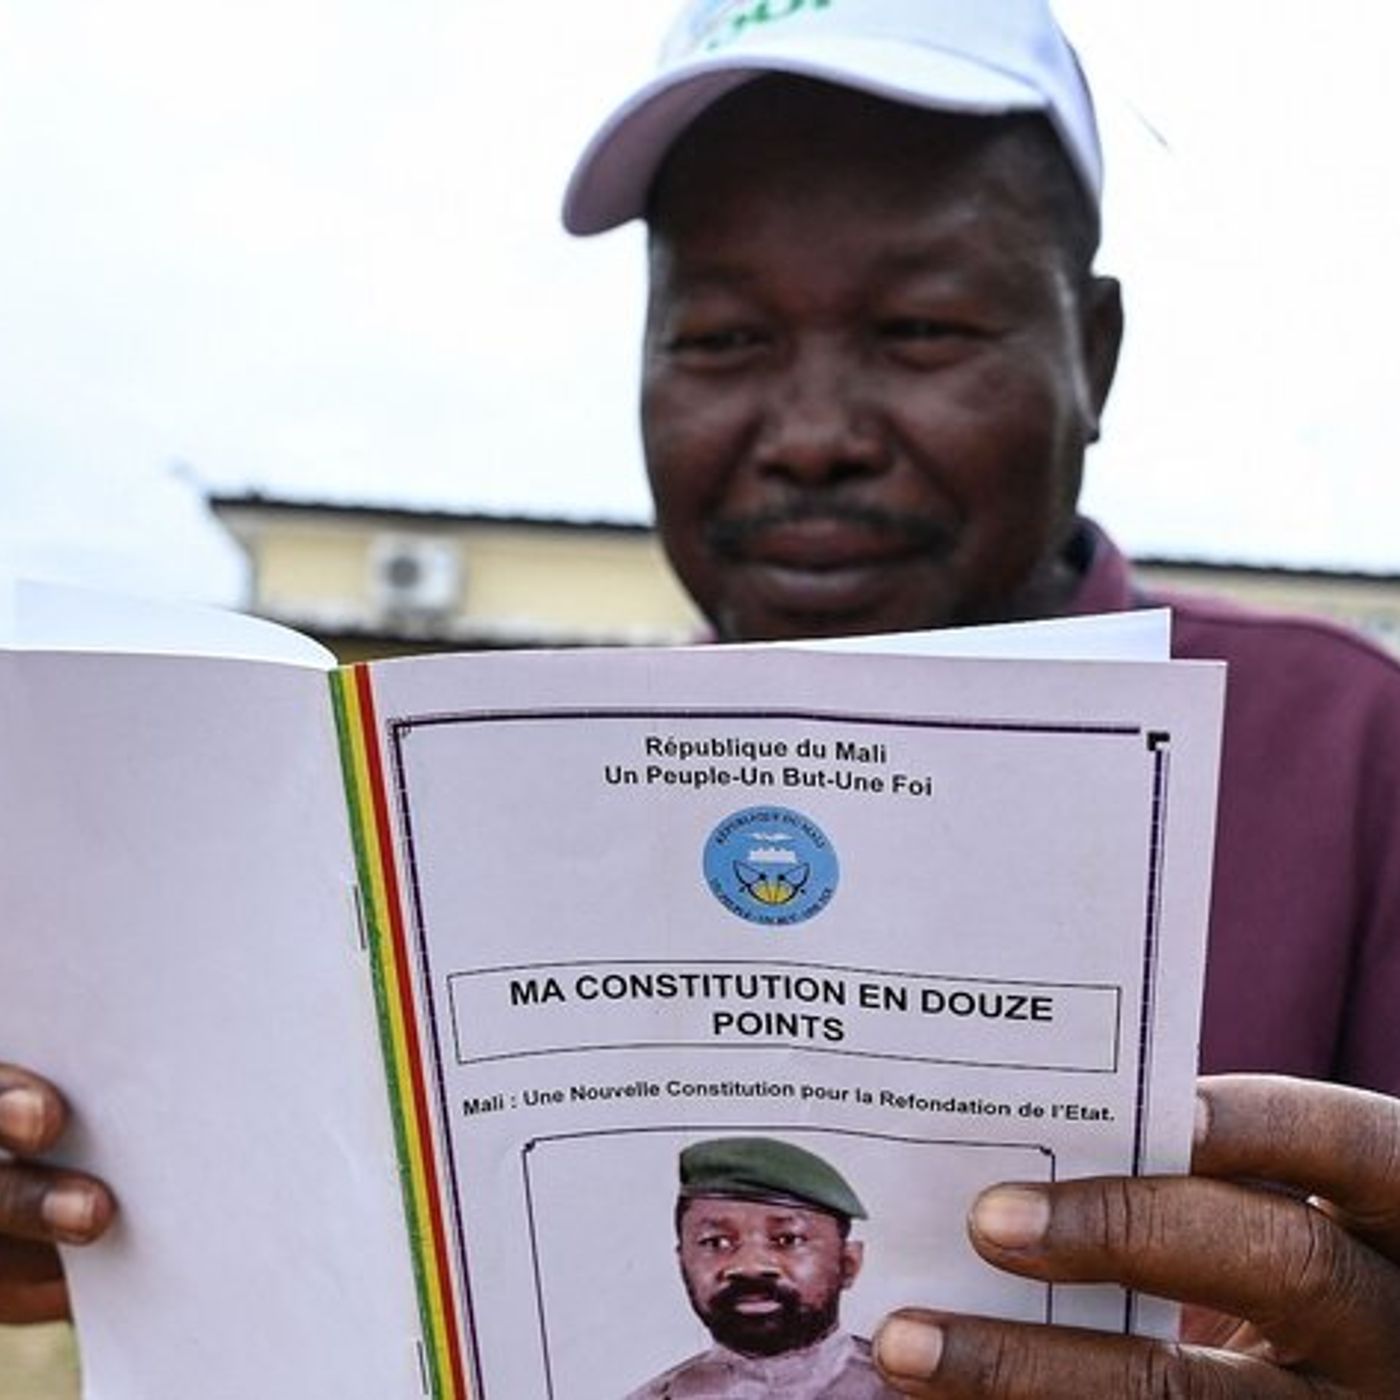 Africana: Il referendum costituzionale in Mali